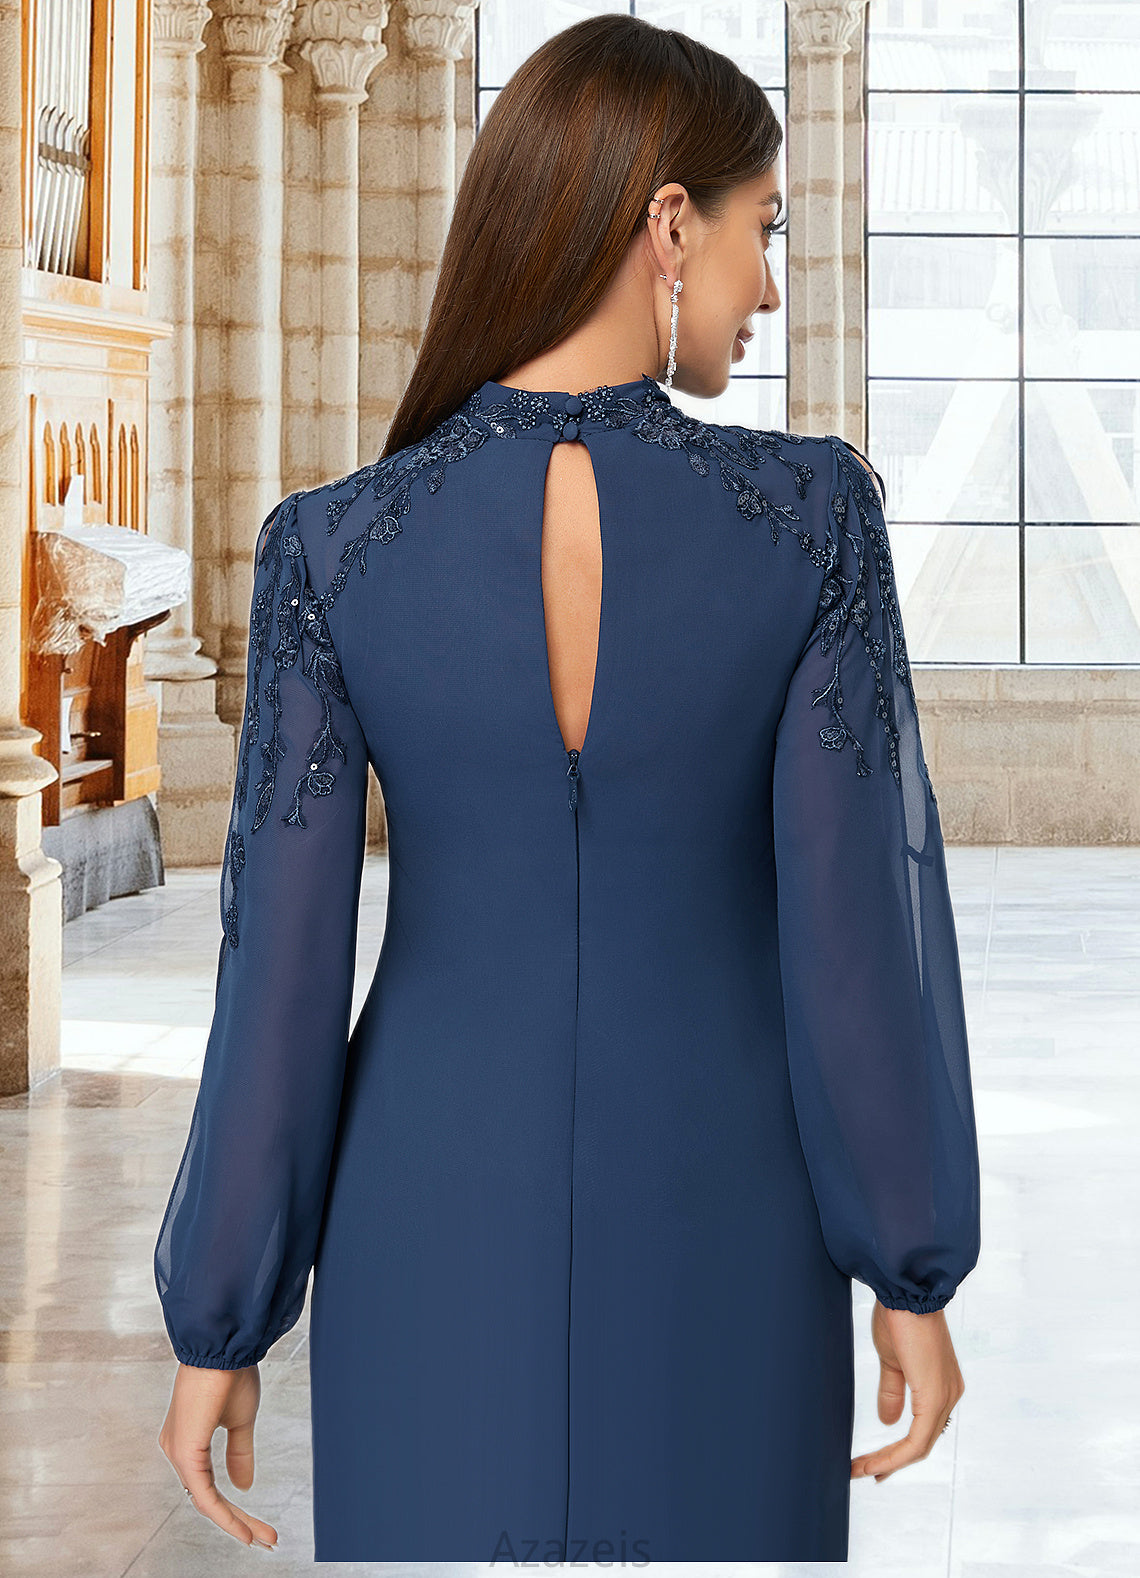 Yareli Sheath/Column High Neck Knee-Length Chiffon Cocktail Dress With Appliques Lace Sequins DFP0022408